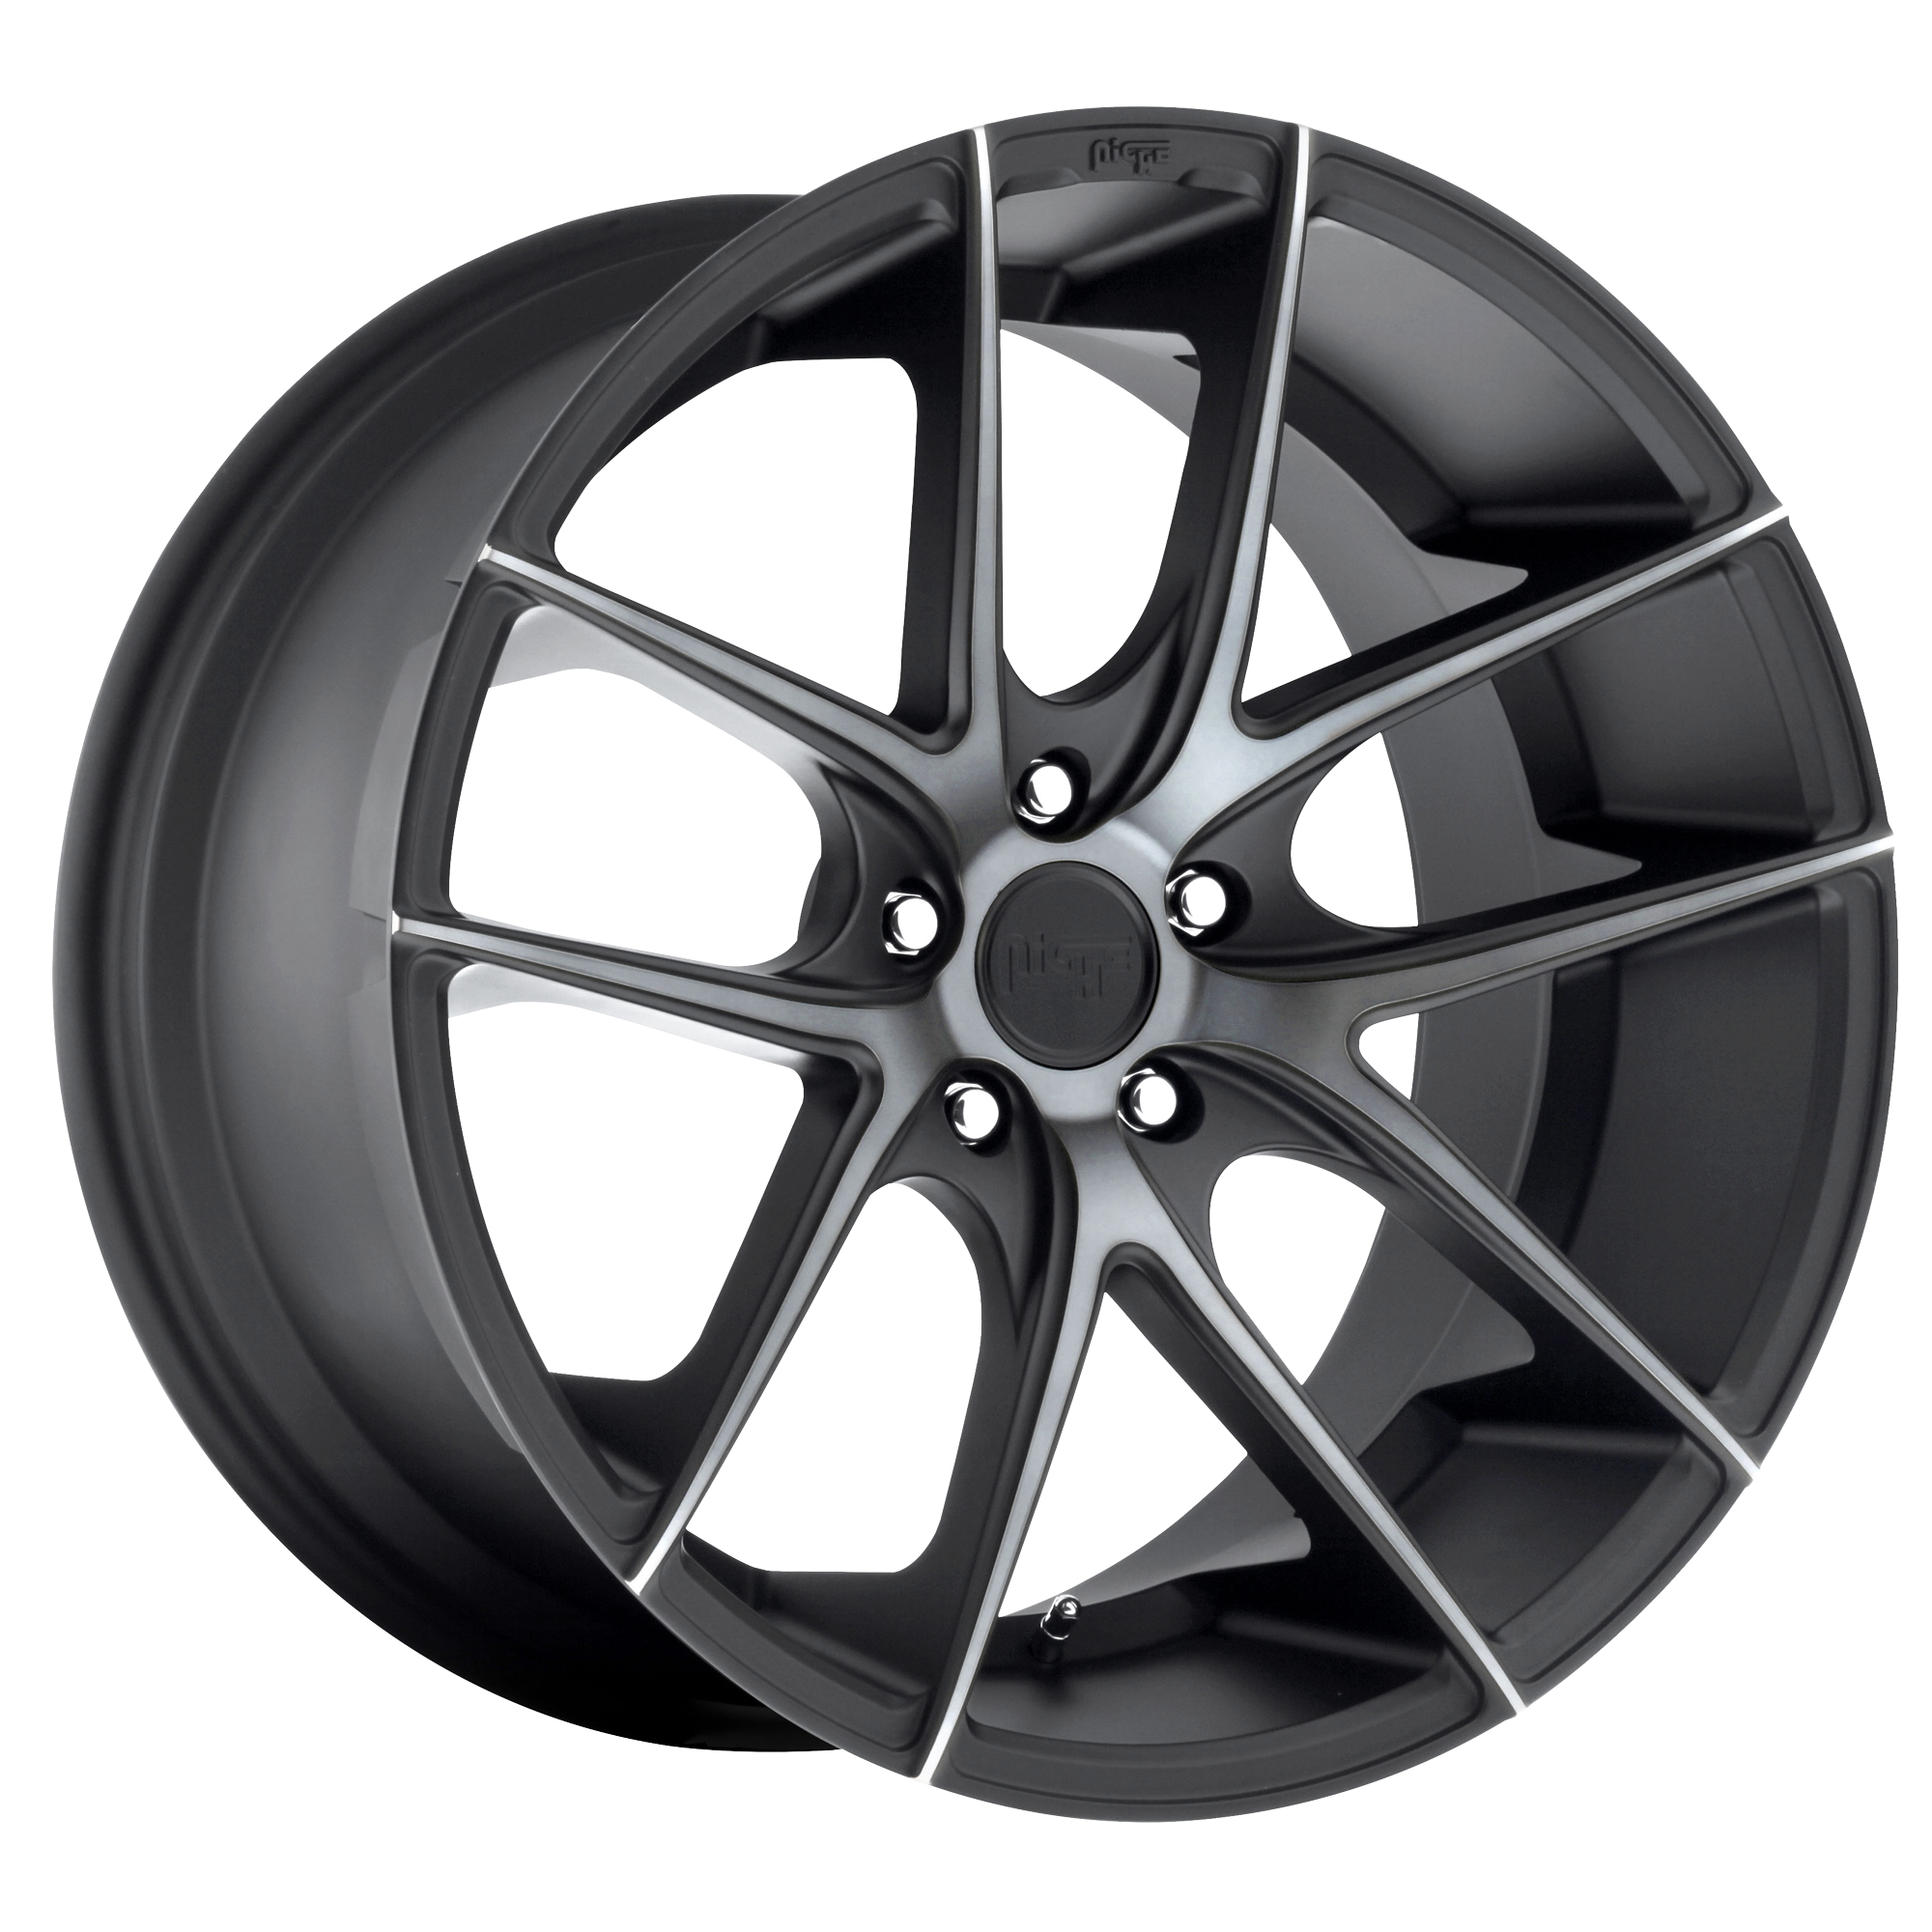 TARGA 20x10.5 5x130.00 MATTE BLACK DOUBLE DARK TINT (40 mm) - Tires and Engine Performance